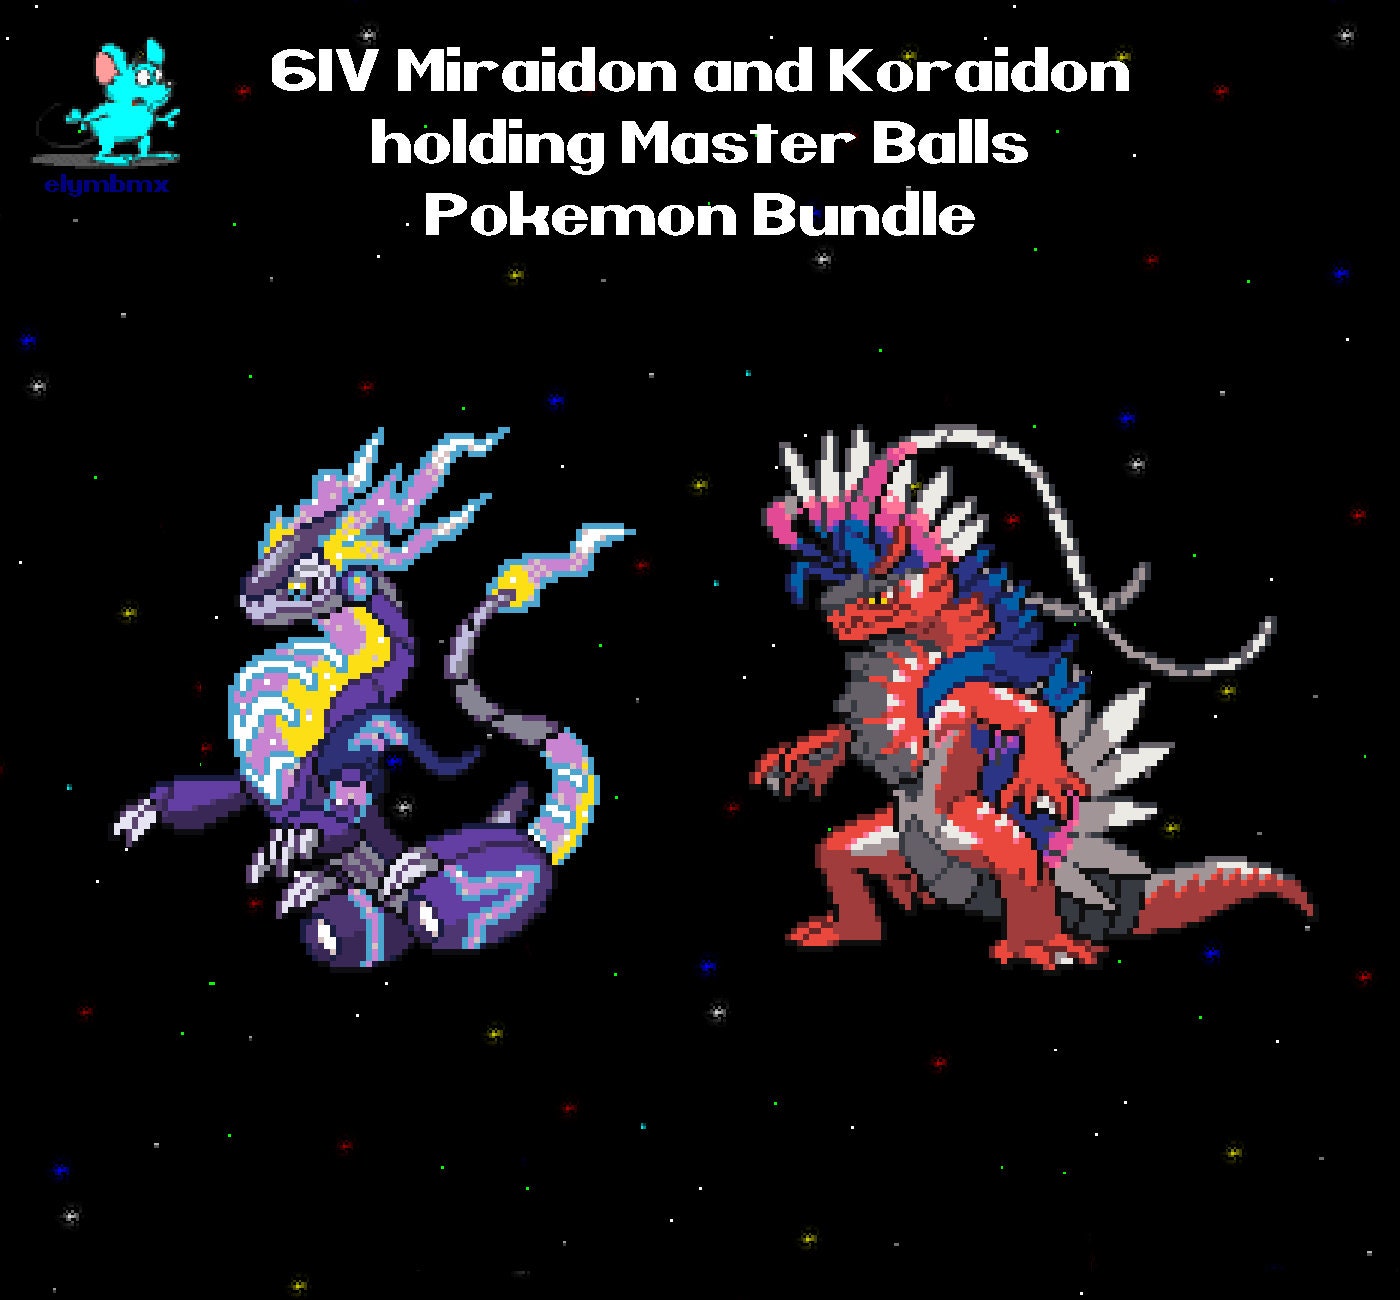 KORAIDON MIRAIDON 6IV Pack for Pokemon Scarlet and Violet